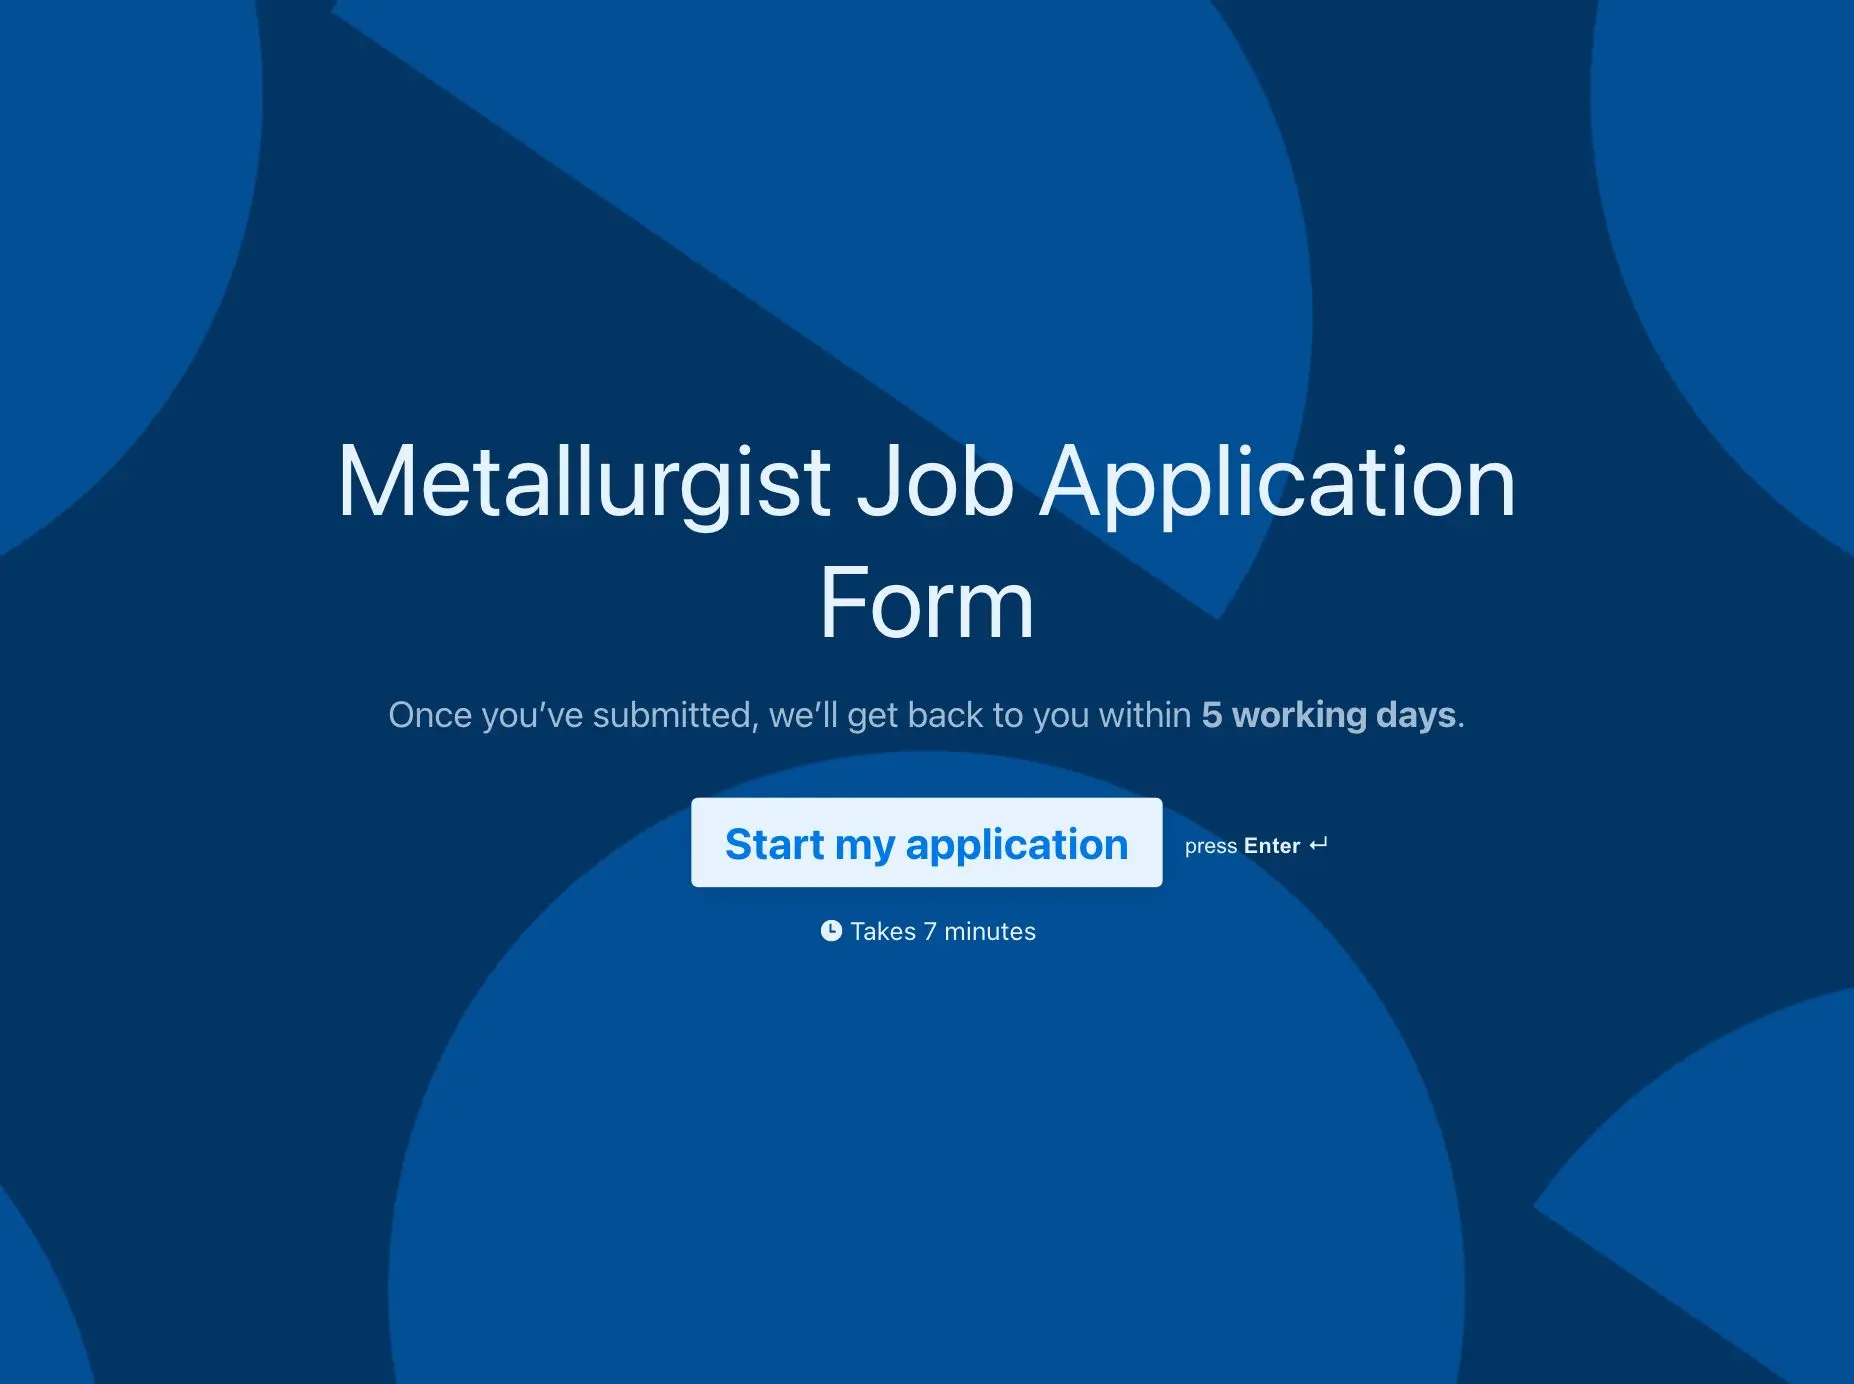 Metallurgist Job Application Form Template Hero